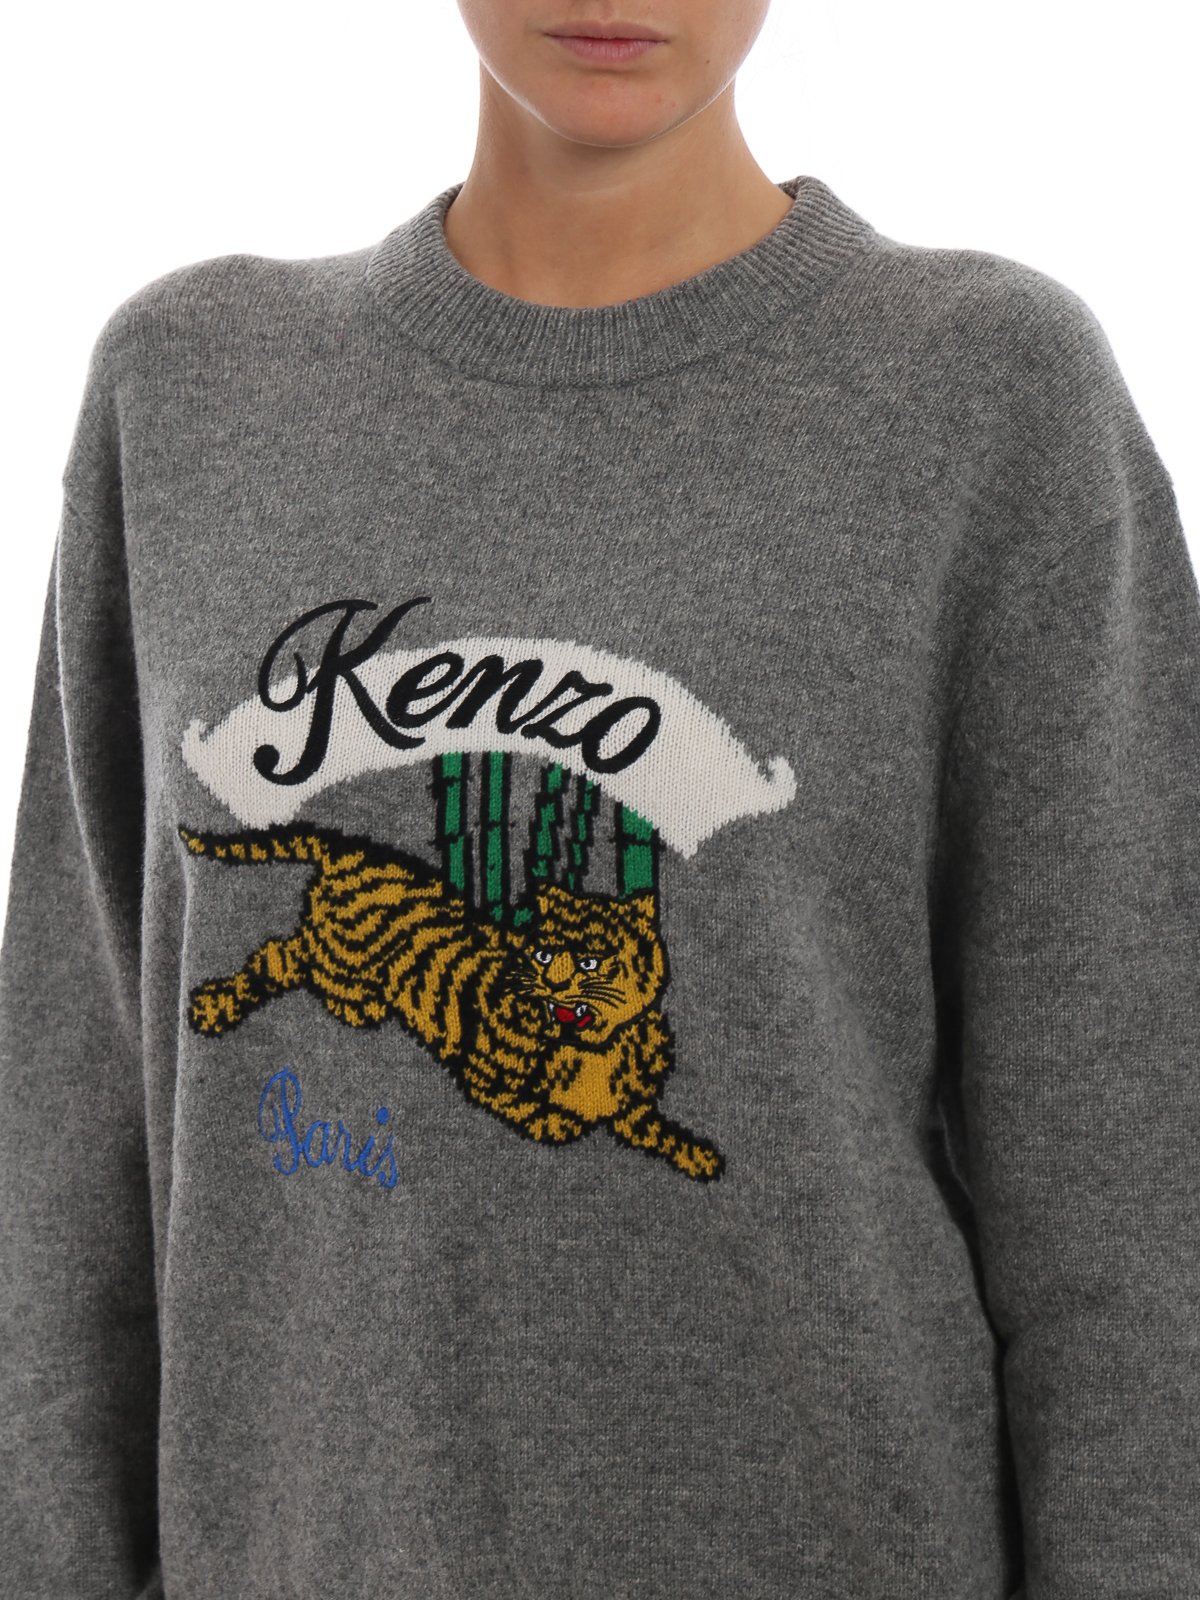 kenzo jumping tiger